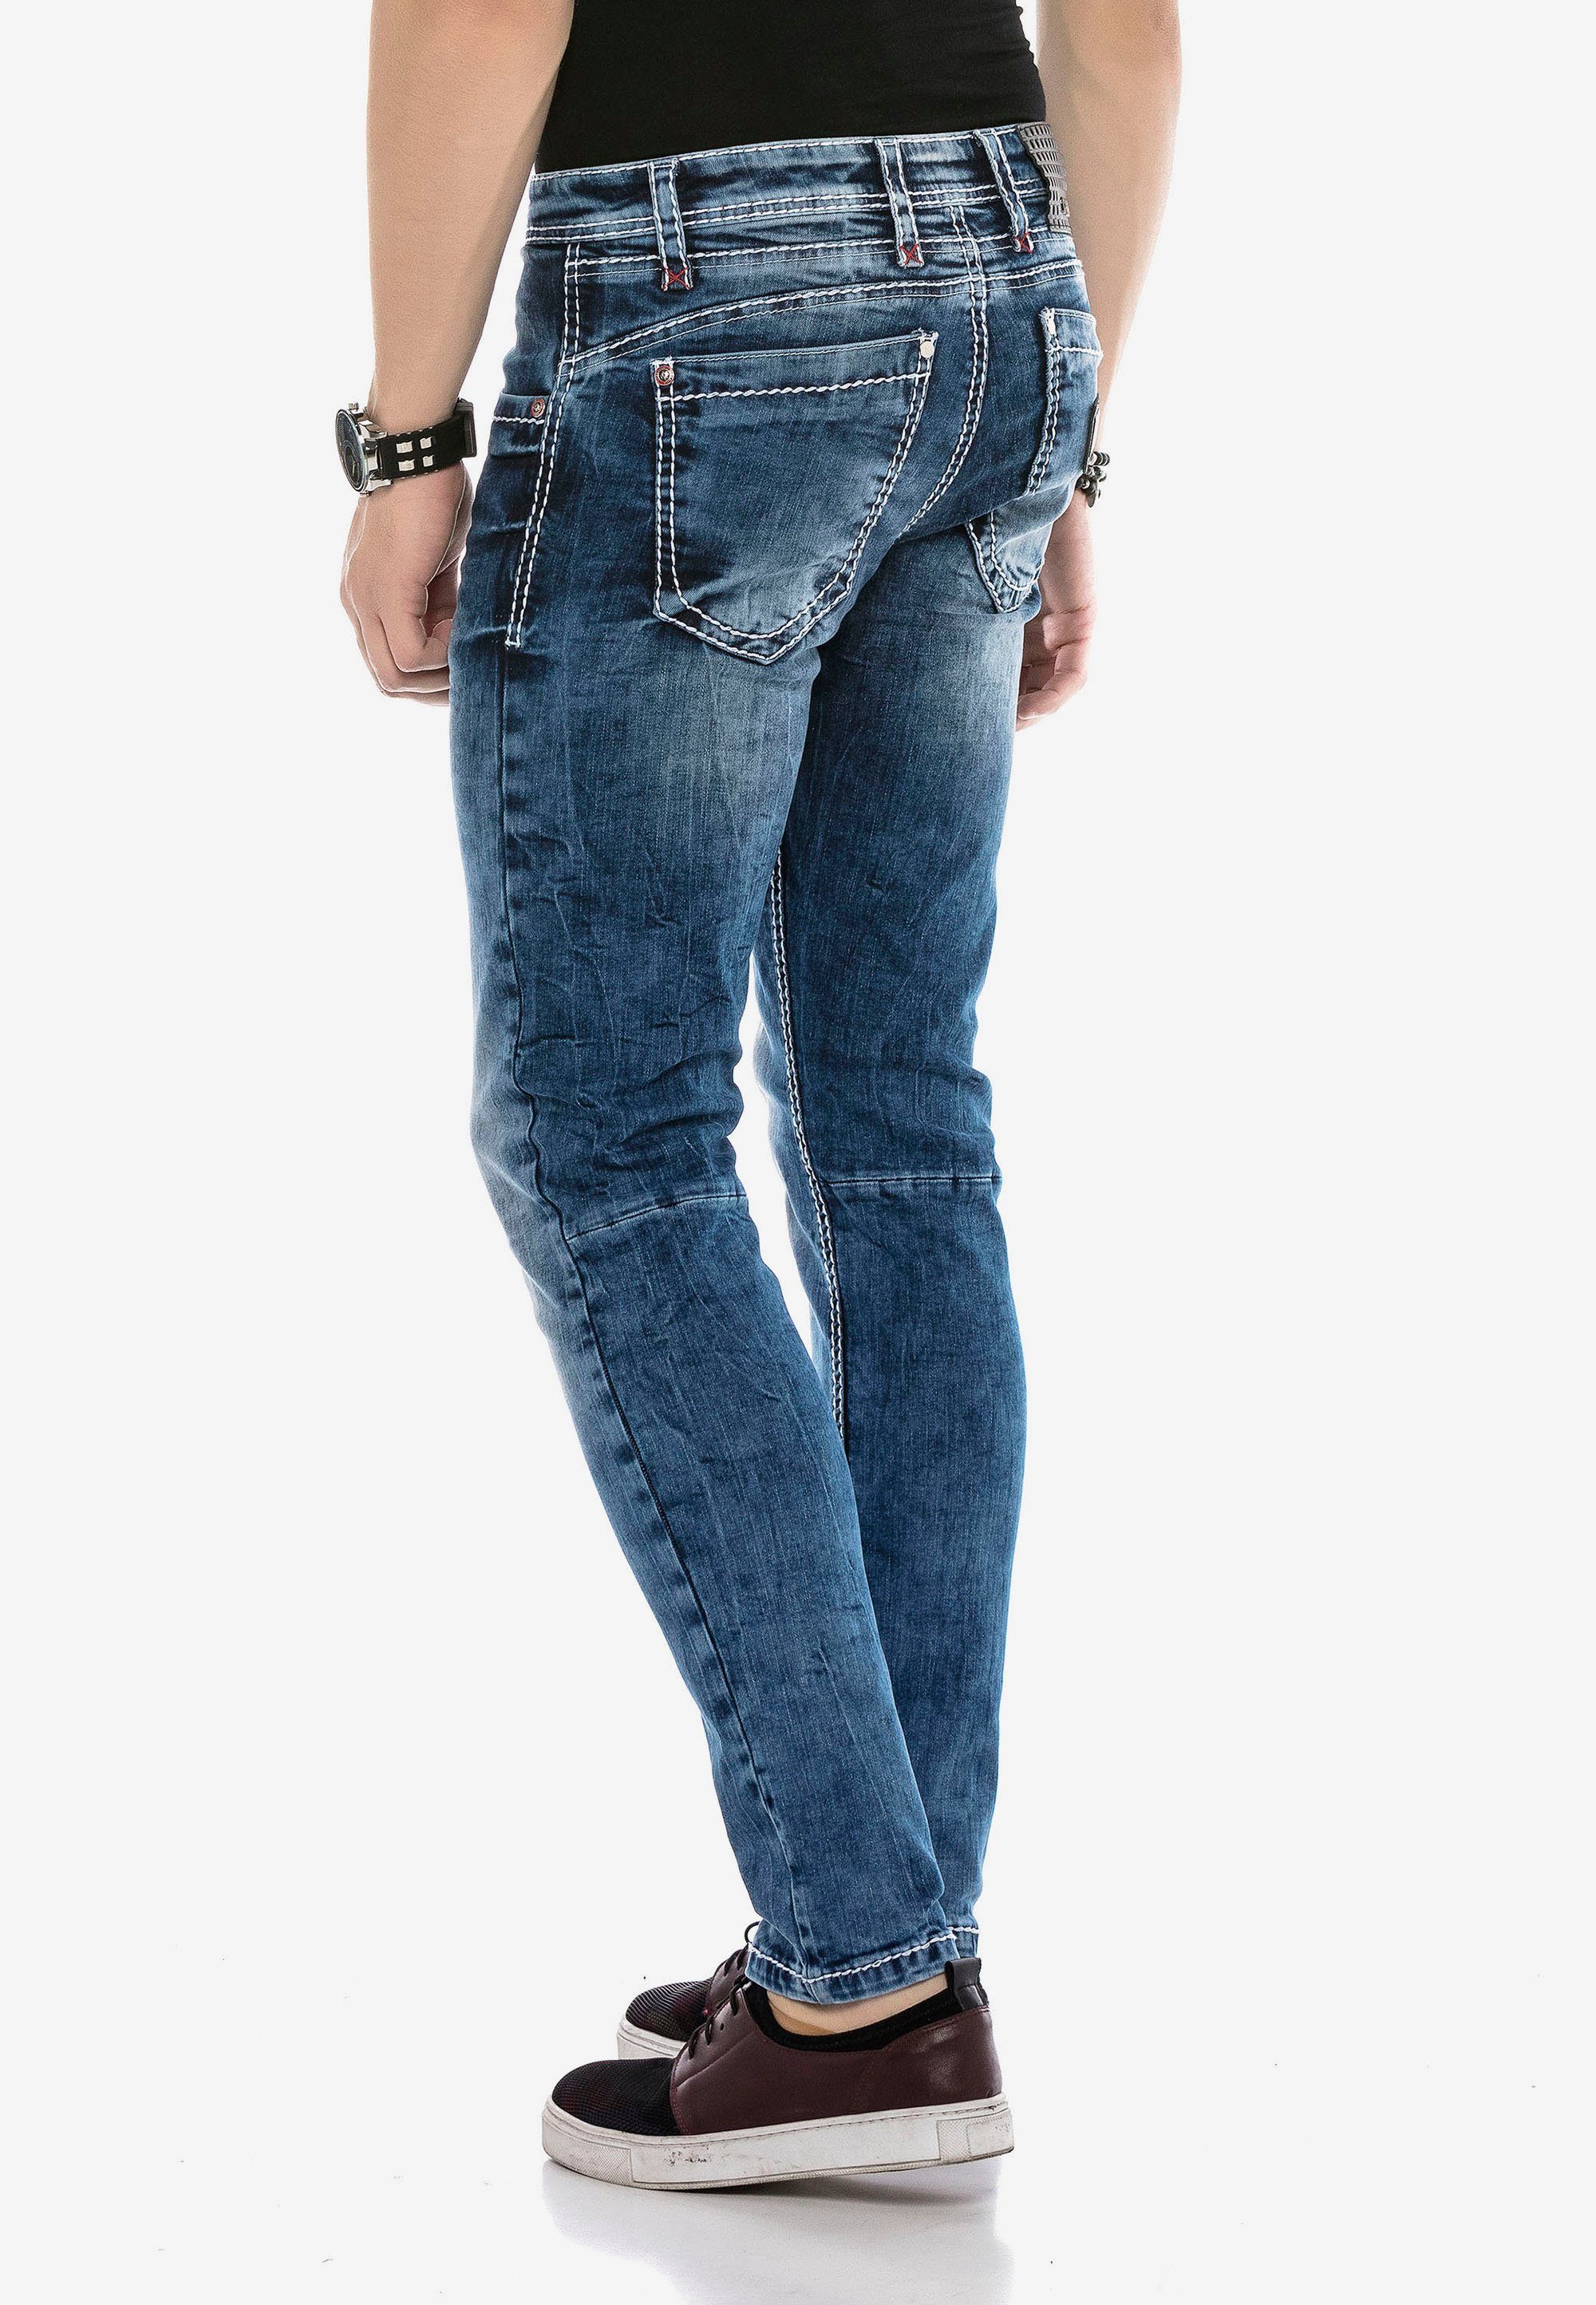 klassischem Jeans in Baxx Bequeme & Cipo Design